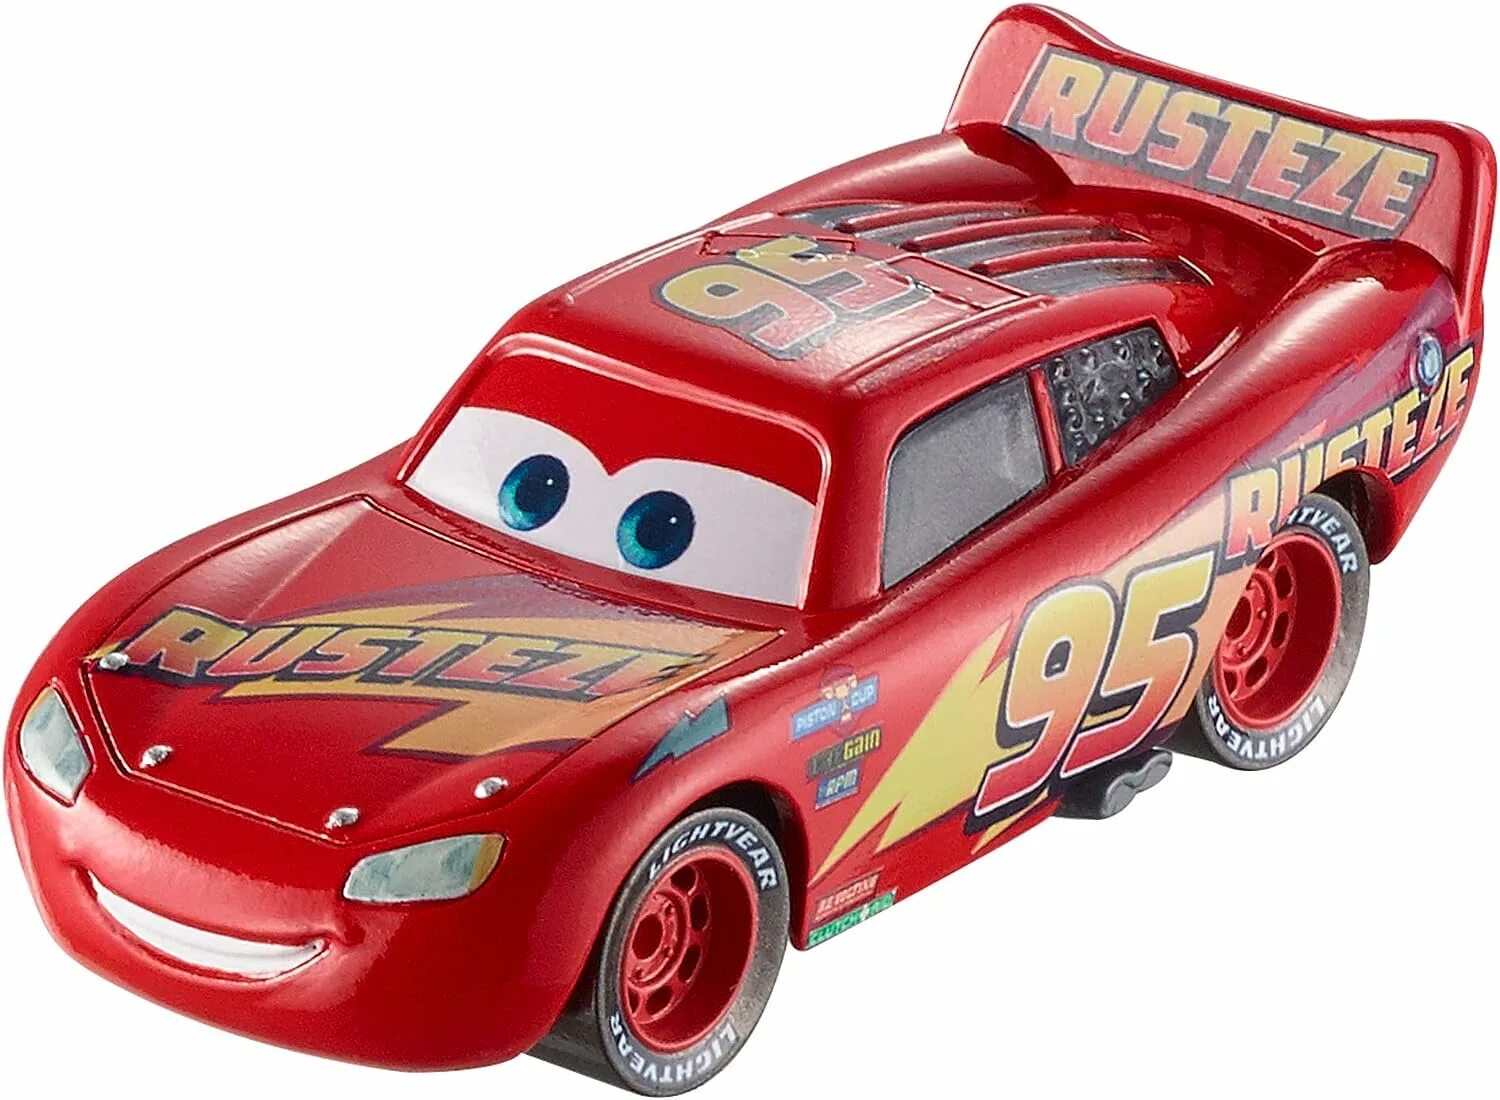 Номер молнии маквина. Cars 3 Lightning MCQUEEN Rust Eze Toy. Rust Eze Lightning MCQUEEN. Cars 3 Lightning MCQUEEN 95 Toys. Cars 3 Toys Lightning MCQUEEN.